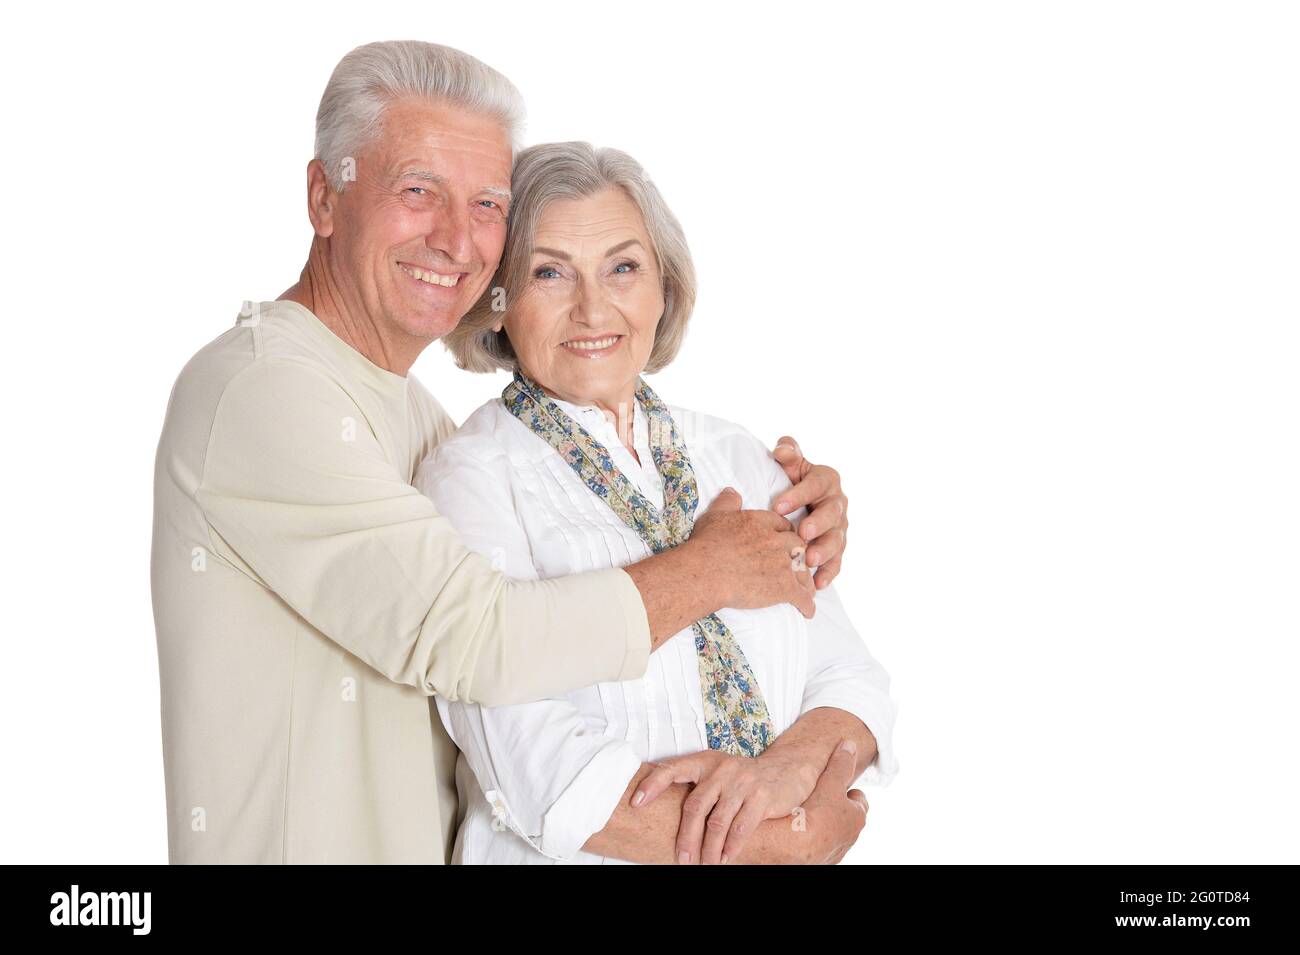 Close up portrait of happy senior couple posing Stock Photo